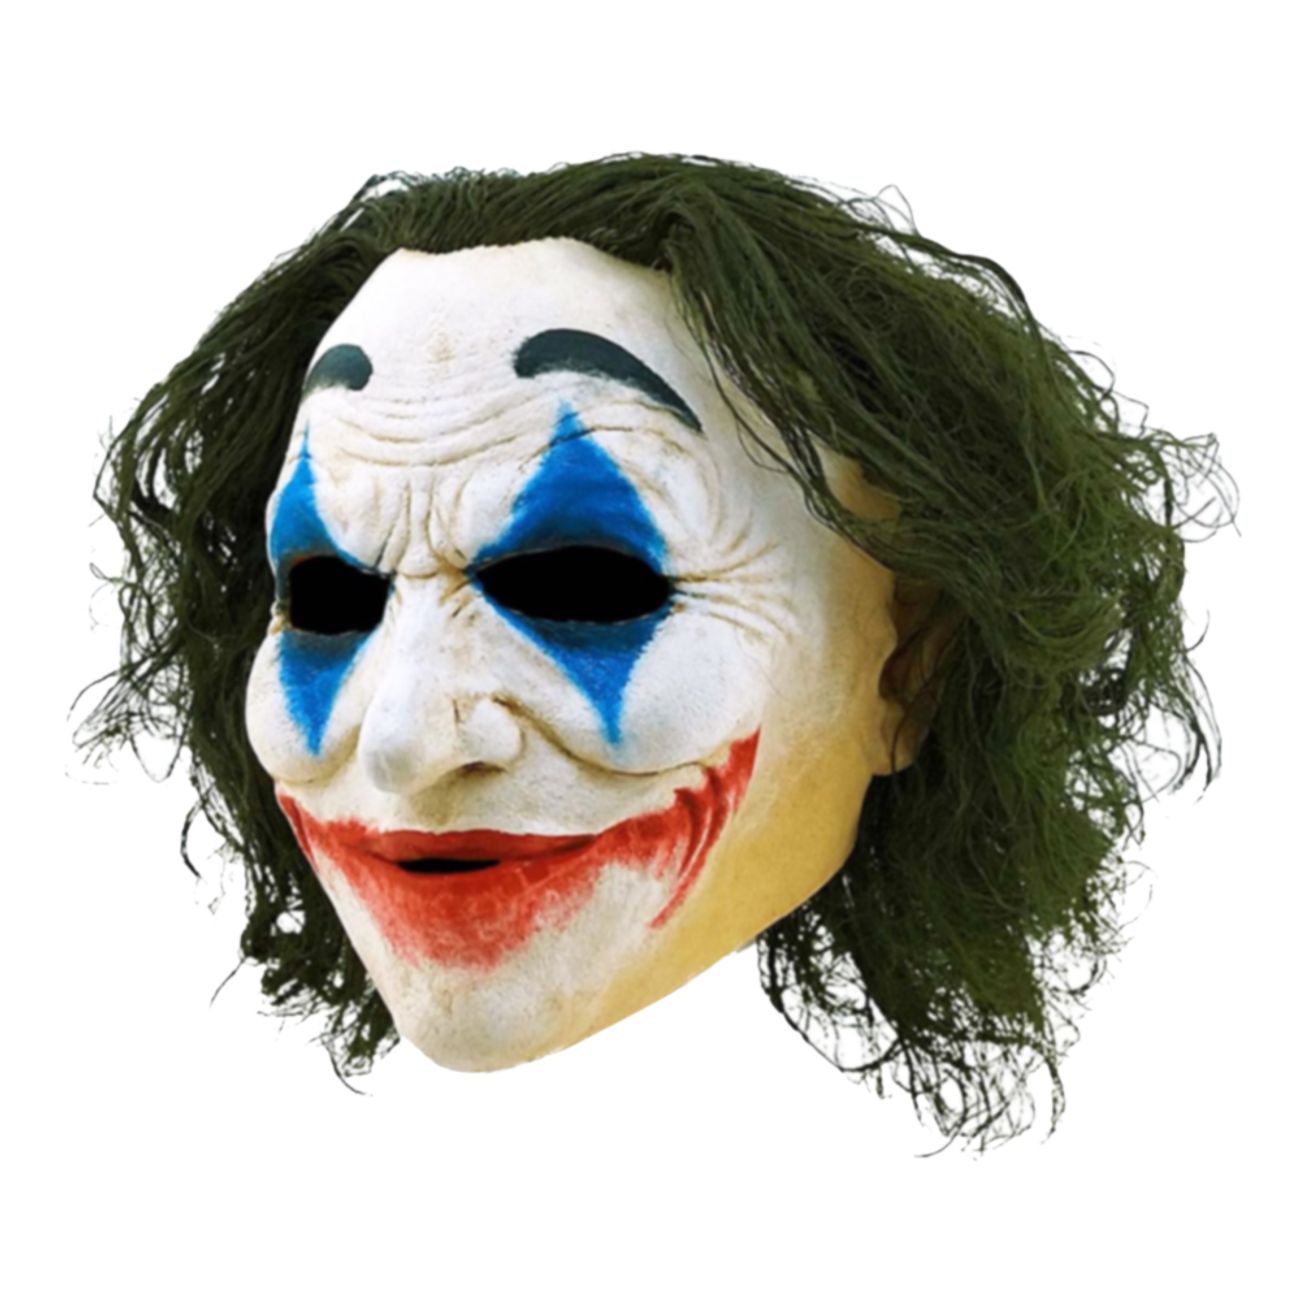 ghoulish-crazy-jack-clown-mask-97058-1